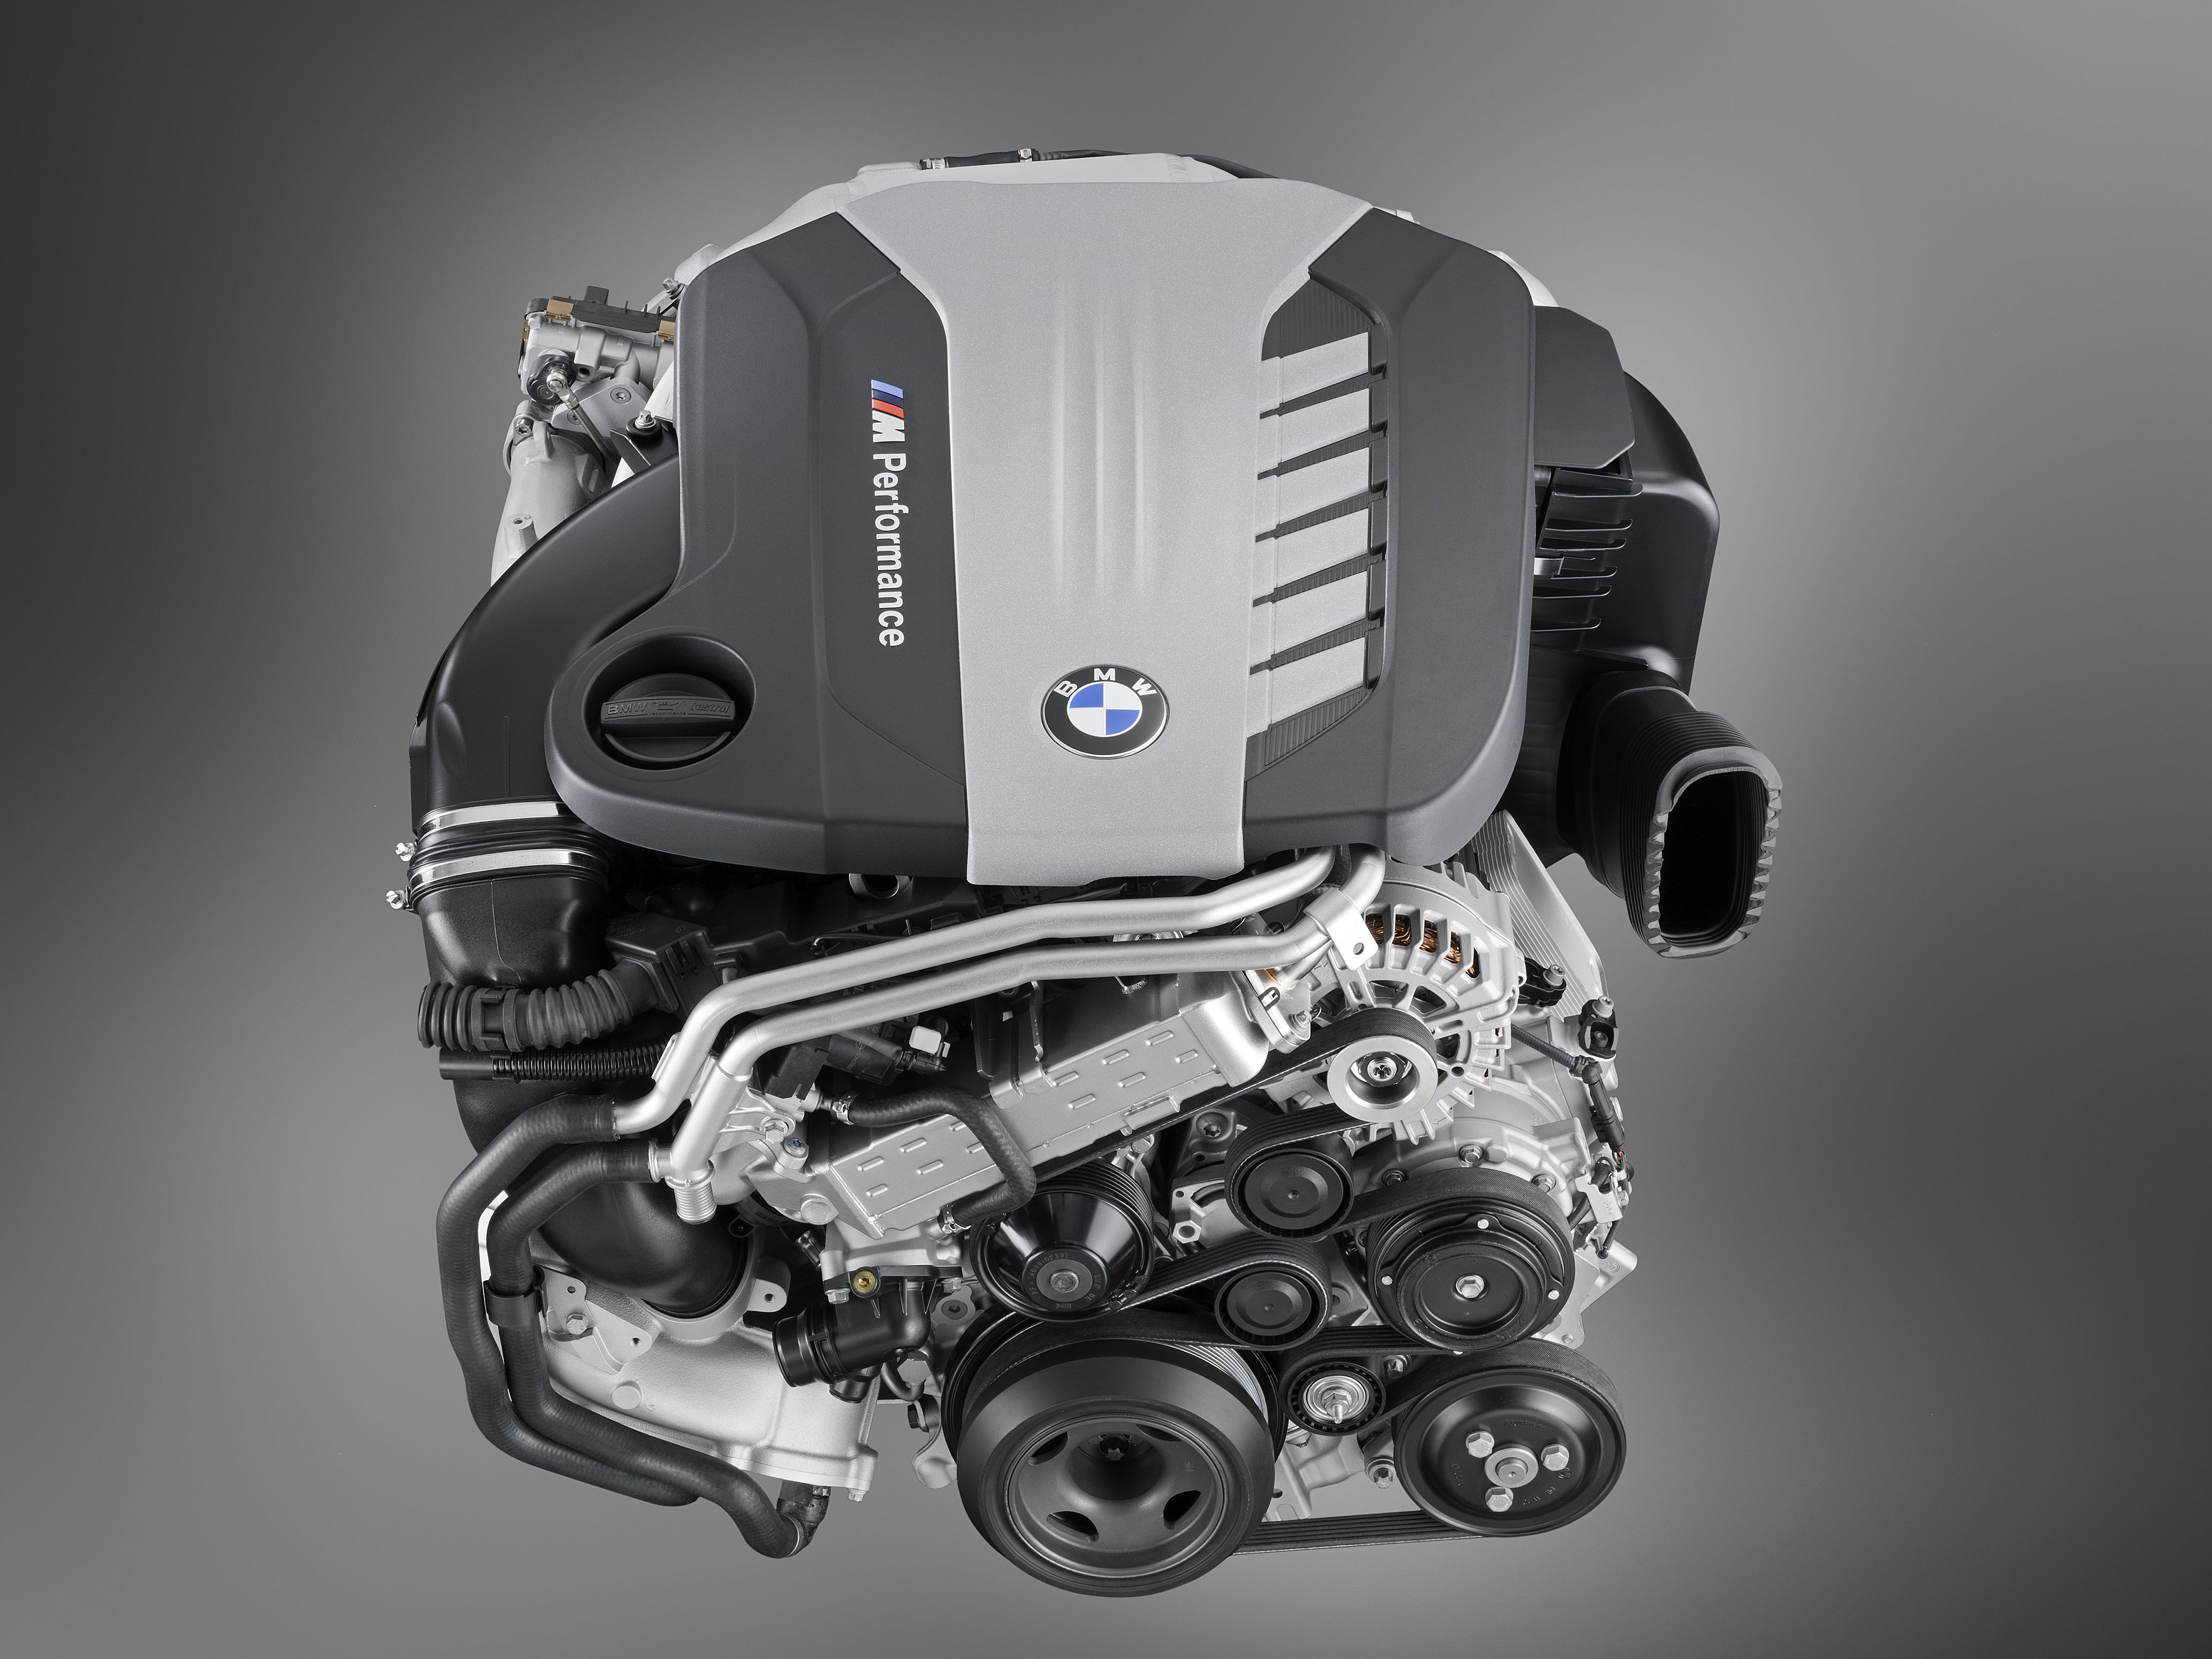 Bmw x6 двигатели. BMW n57. Мотор на БМВ x5m. БМВ х6 дизель мотор. Двигатель BMW x6 m57.